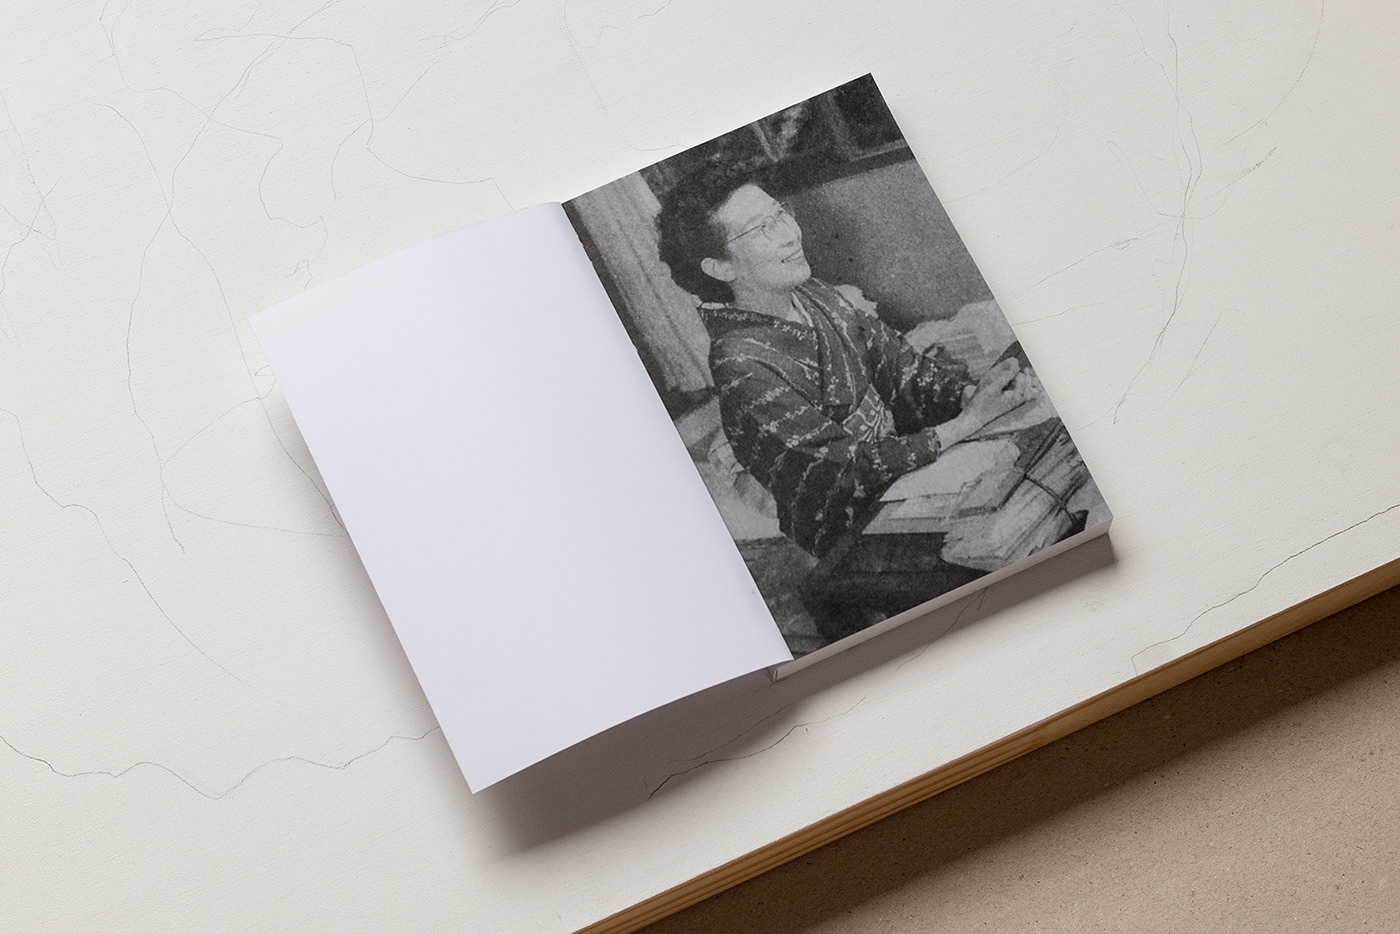 book davidlerones design editorial editorialdesign Haiku japan minimaldesign muistudio